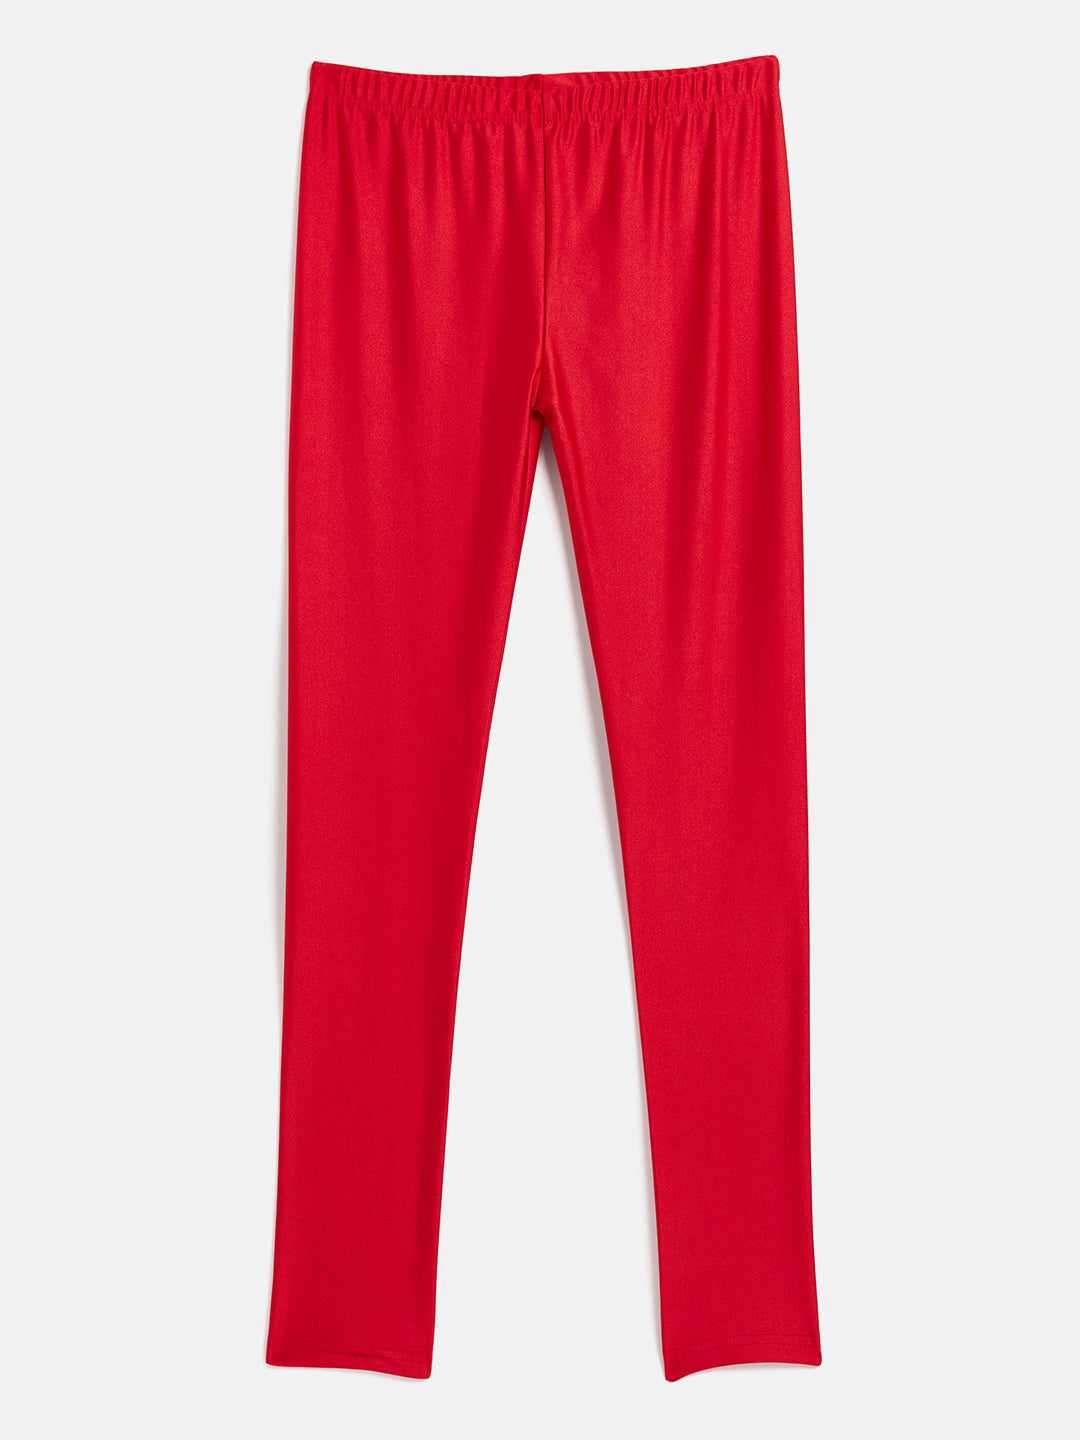 metallic red leggings